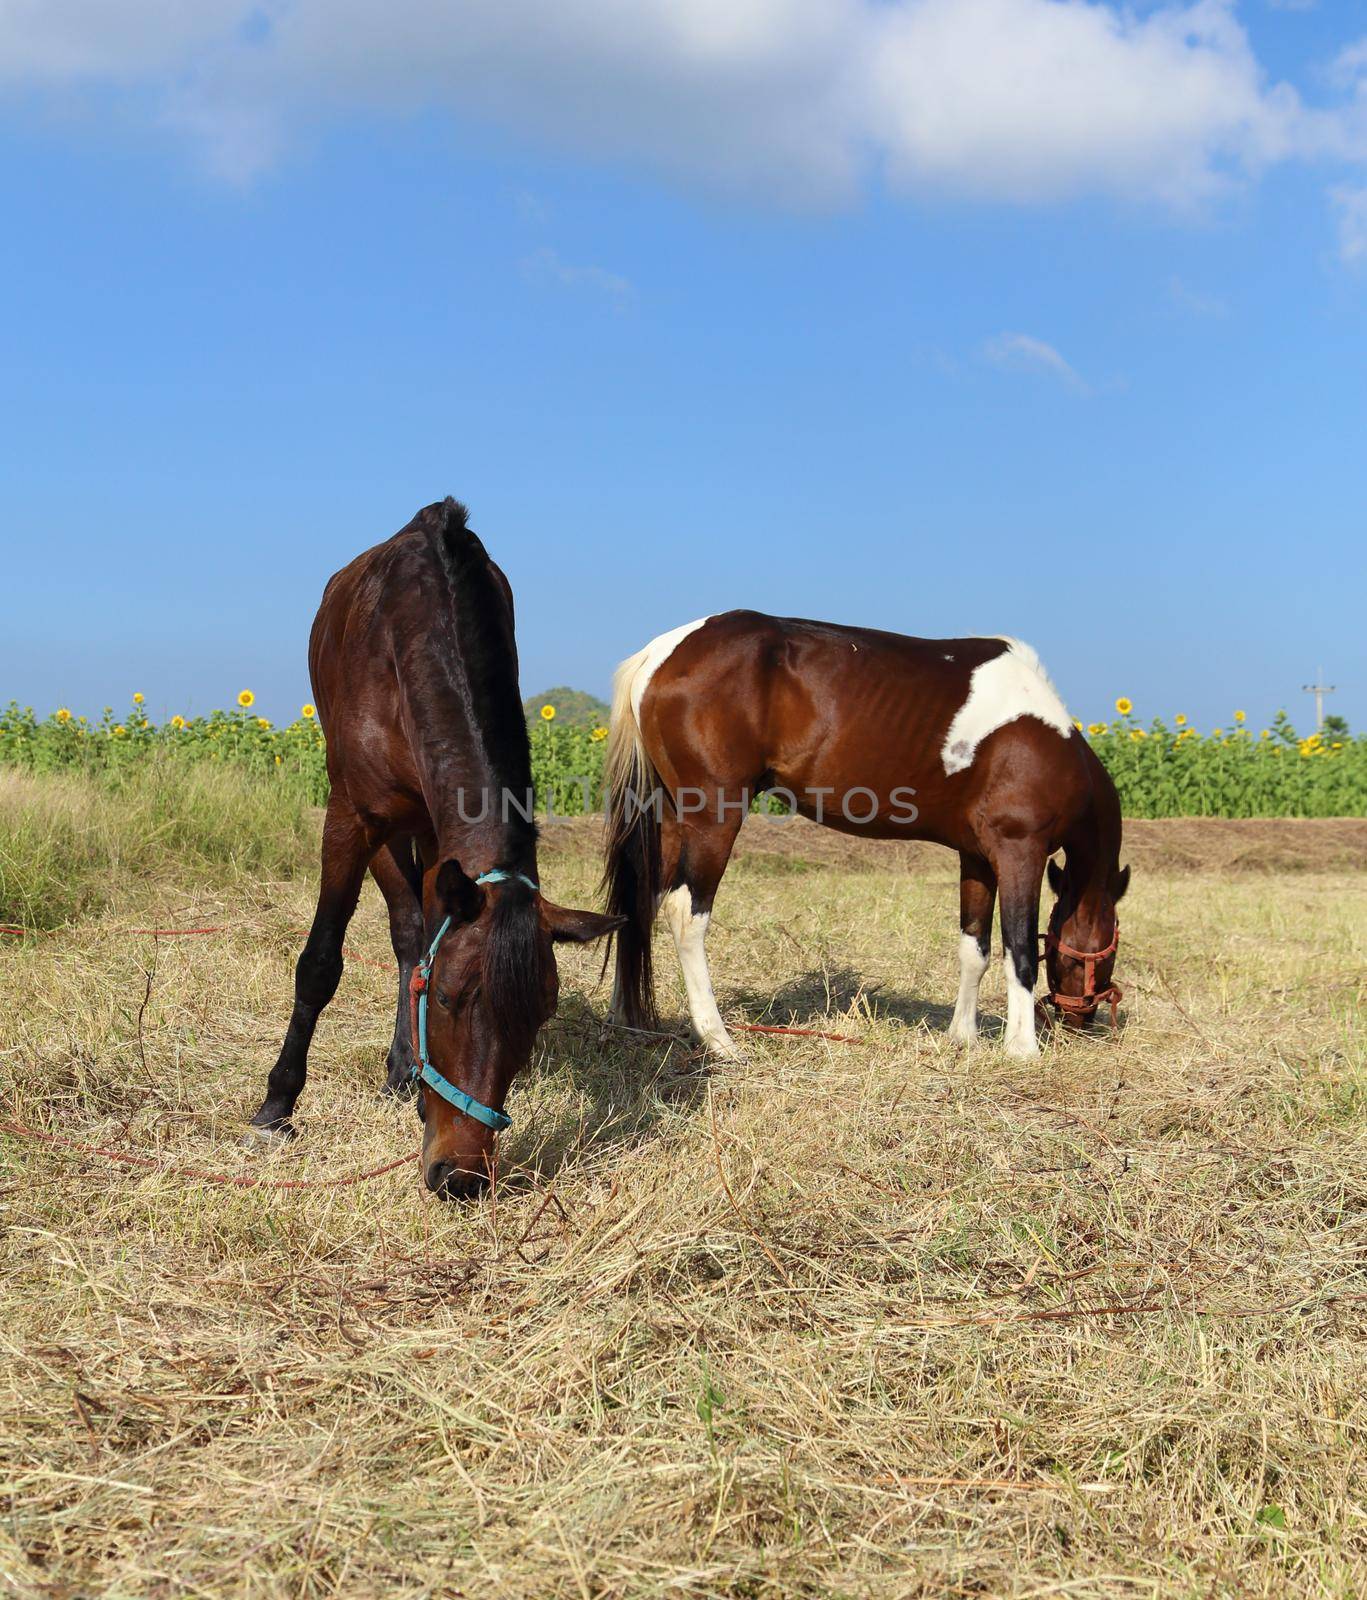 Horses grazing grass in the grass field